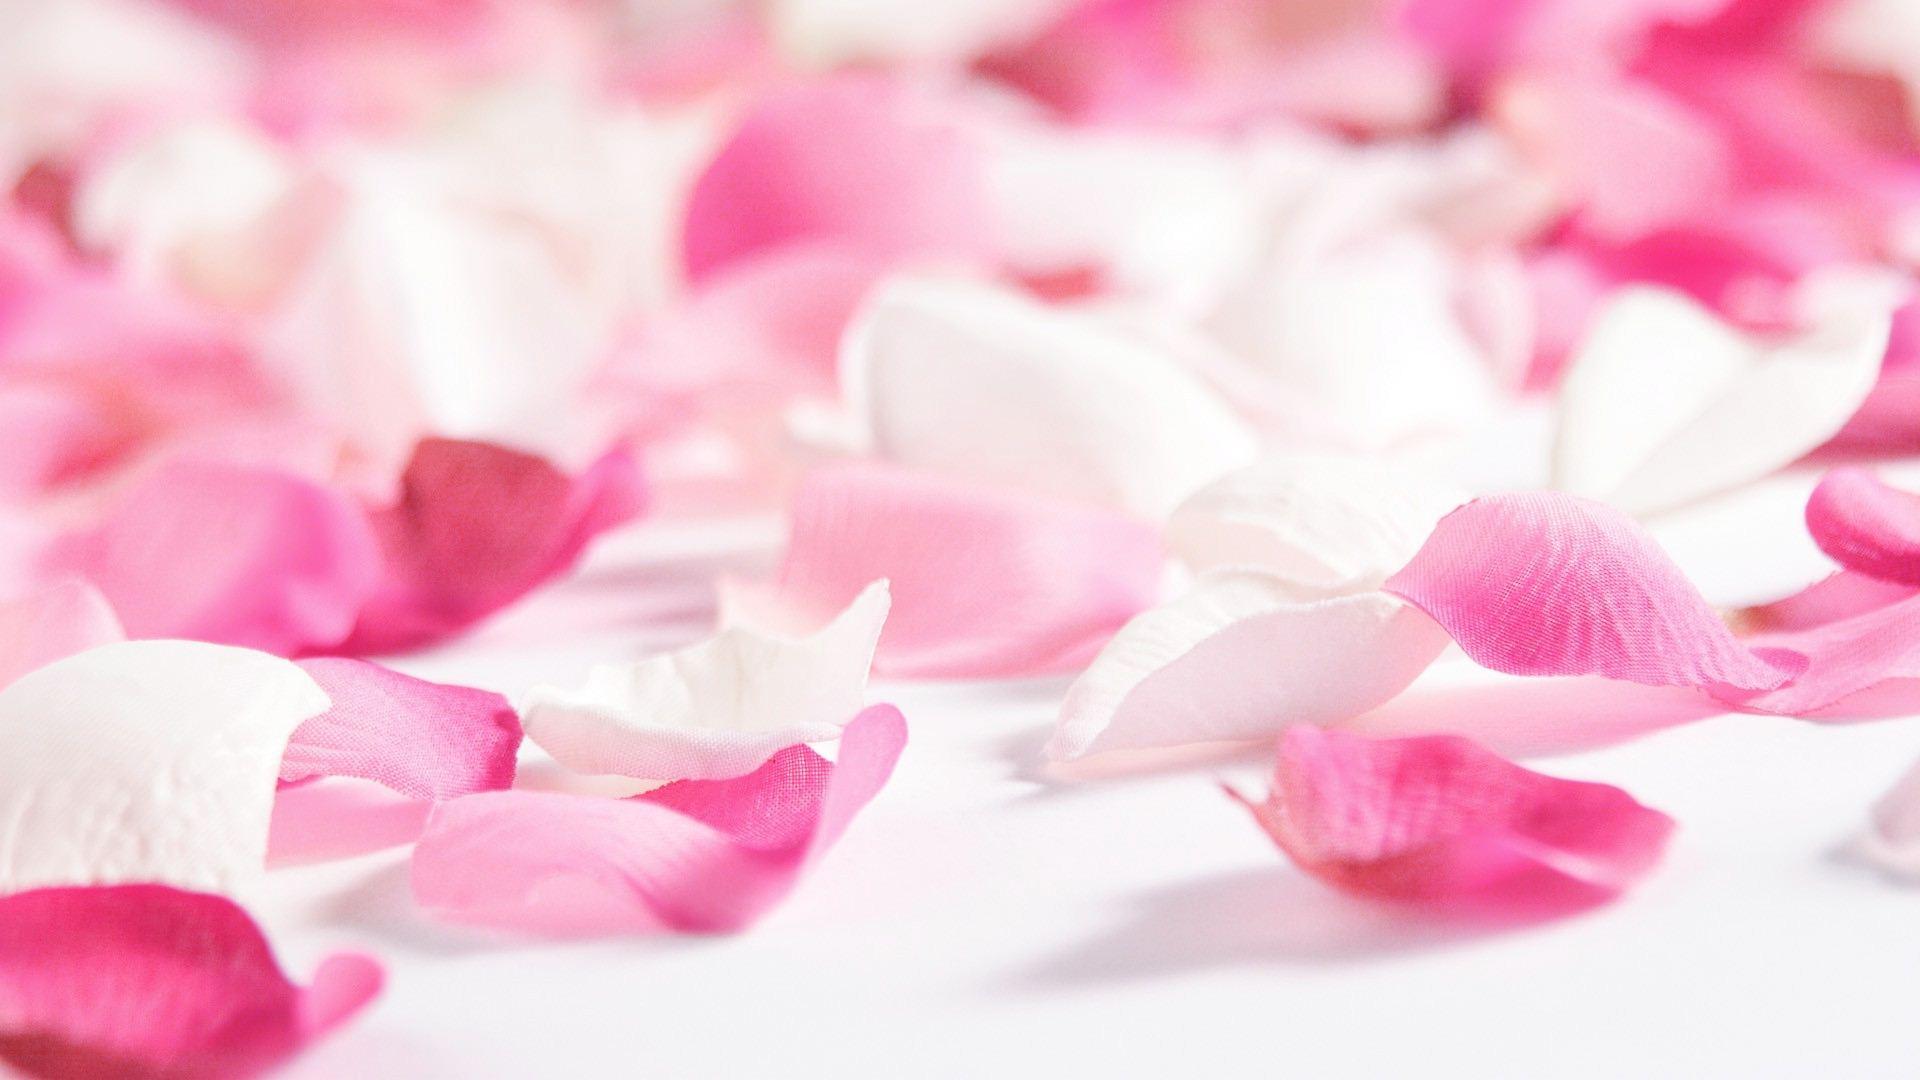 Rose Petals Pictures [HQ] | Download Free Images on Unsplash